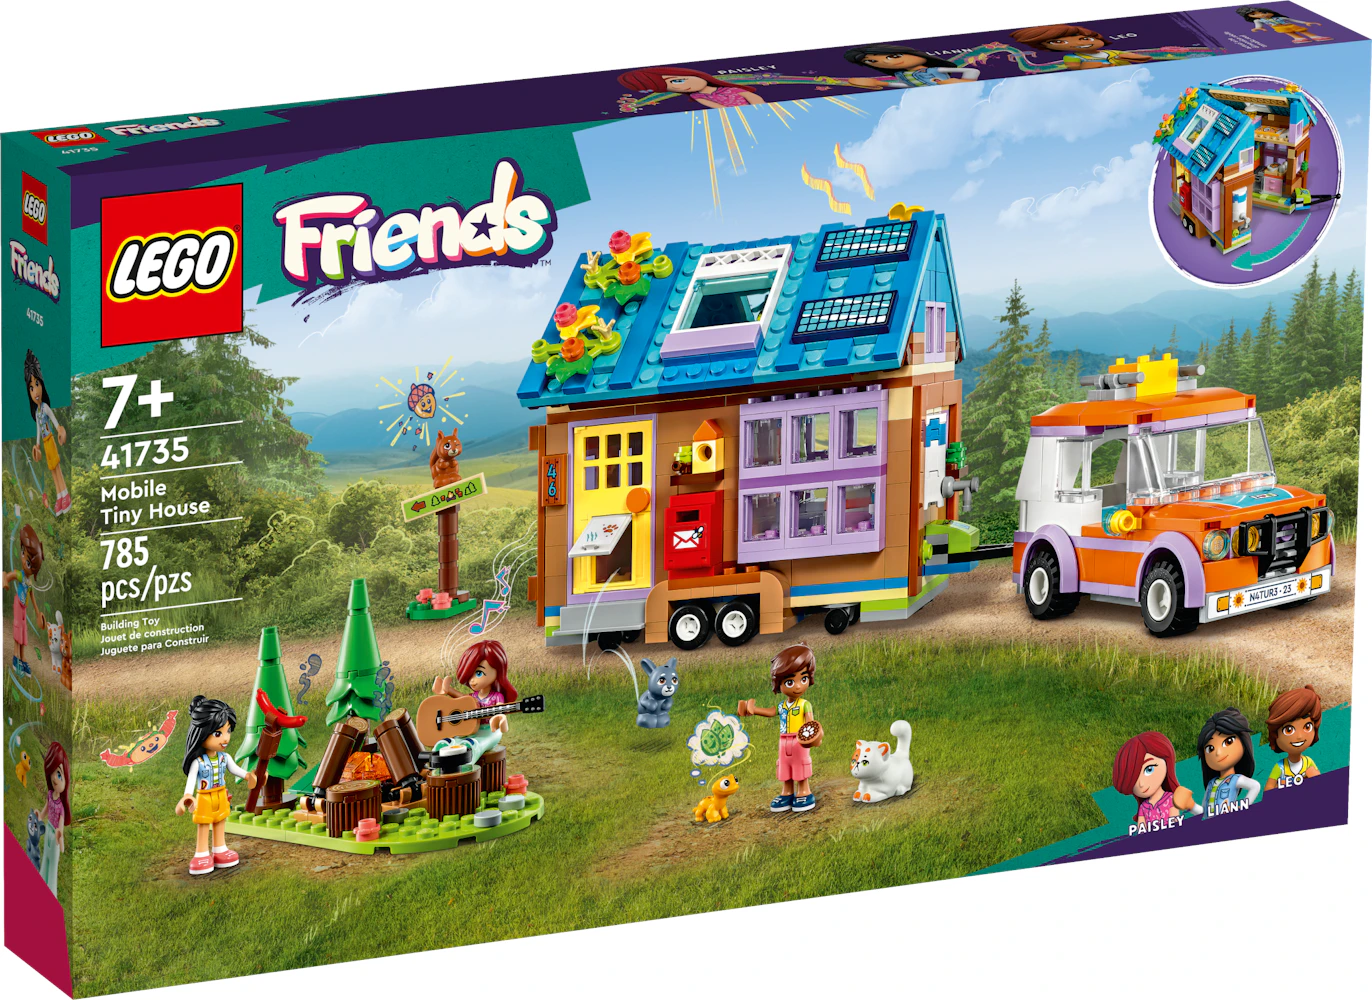 LEGO Friends Mobile Tiny House Set 41735 -